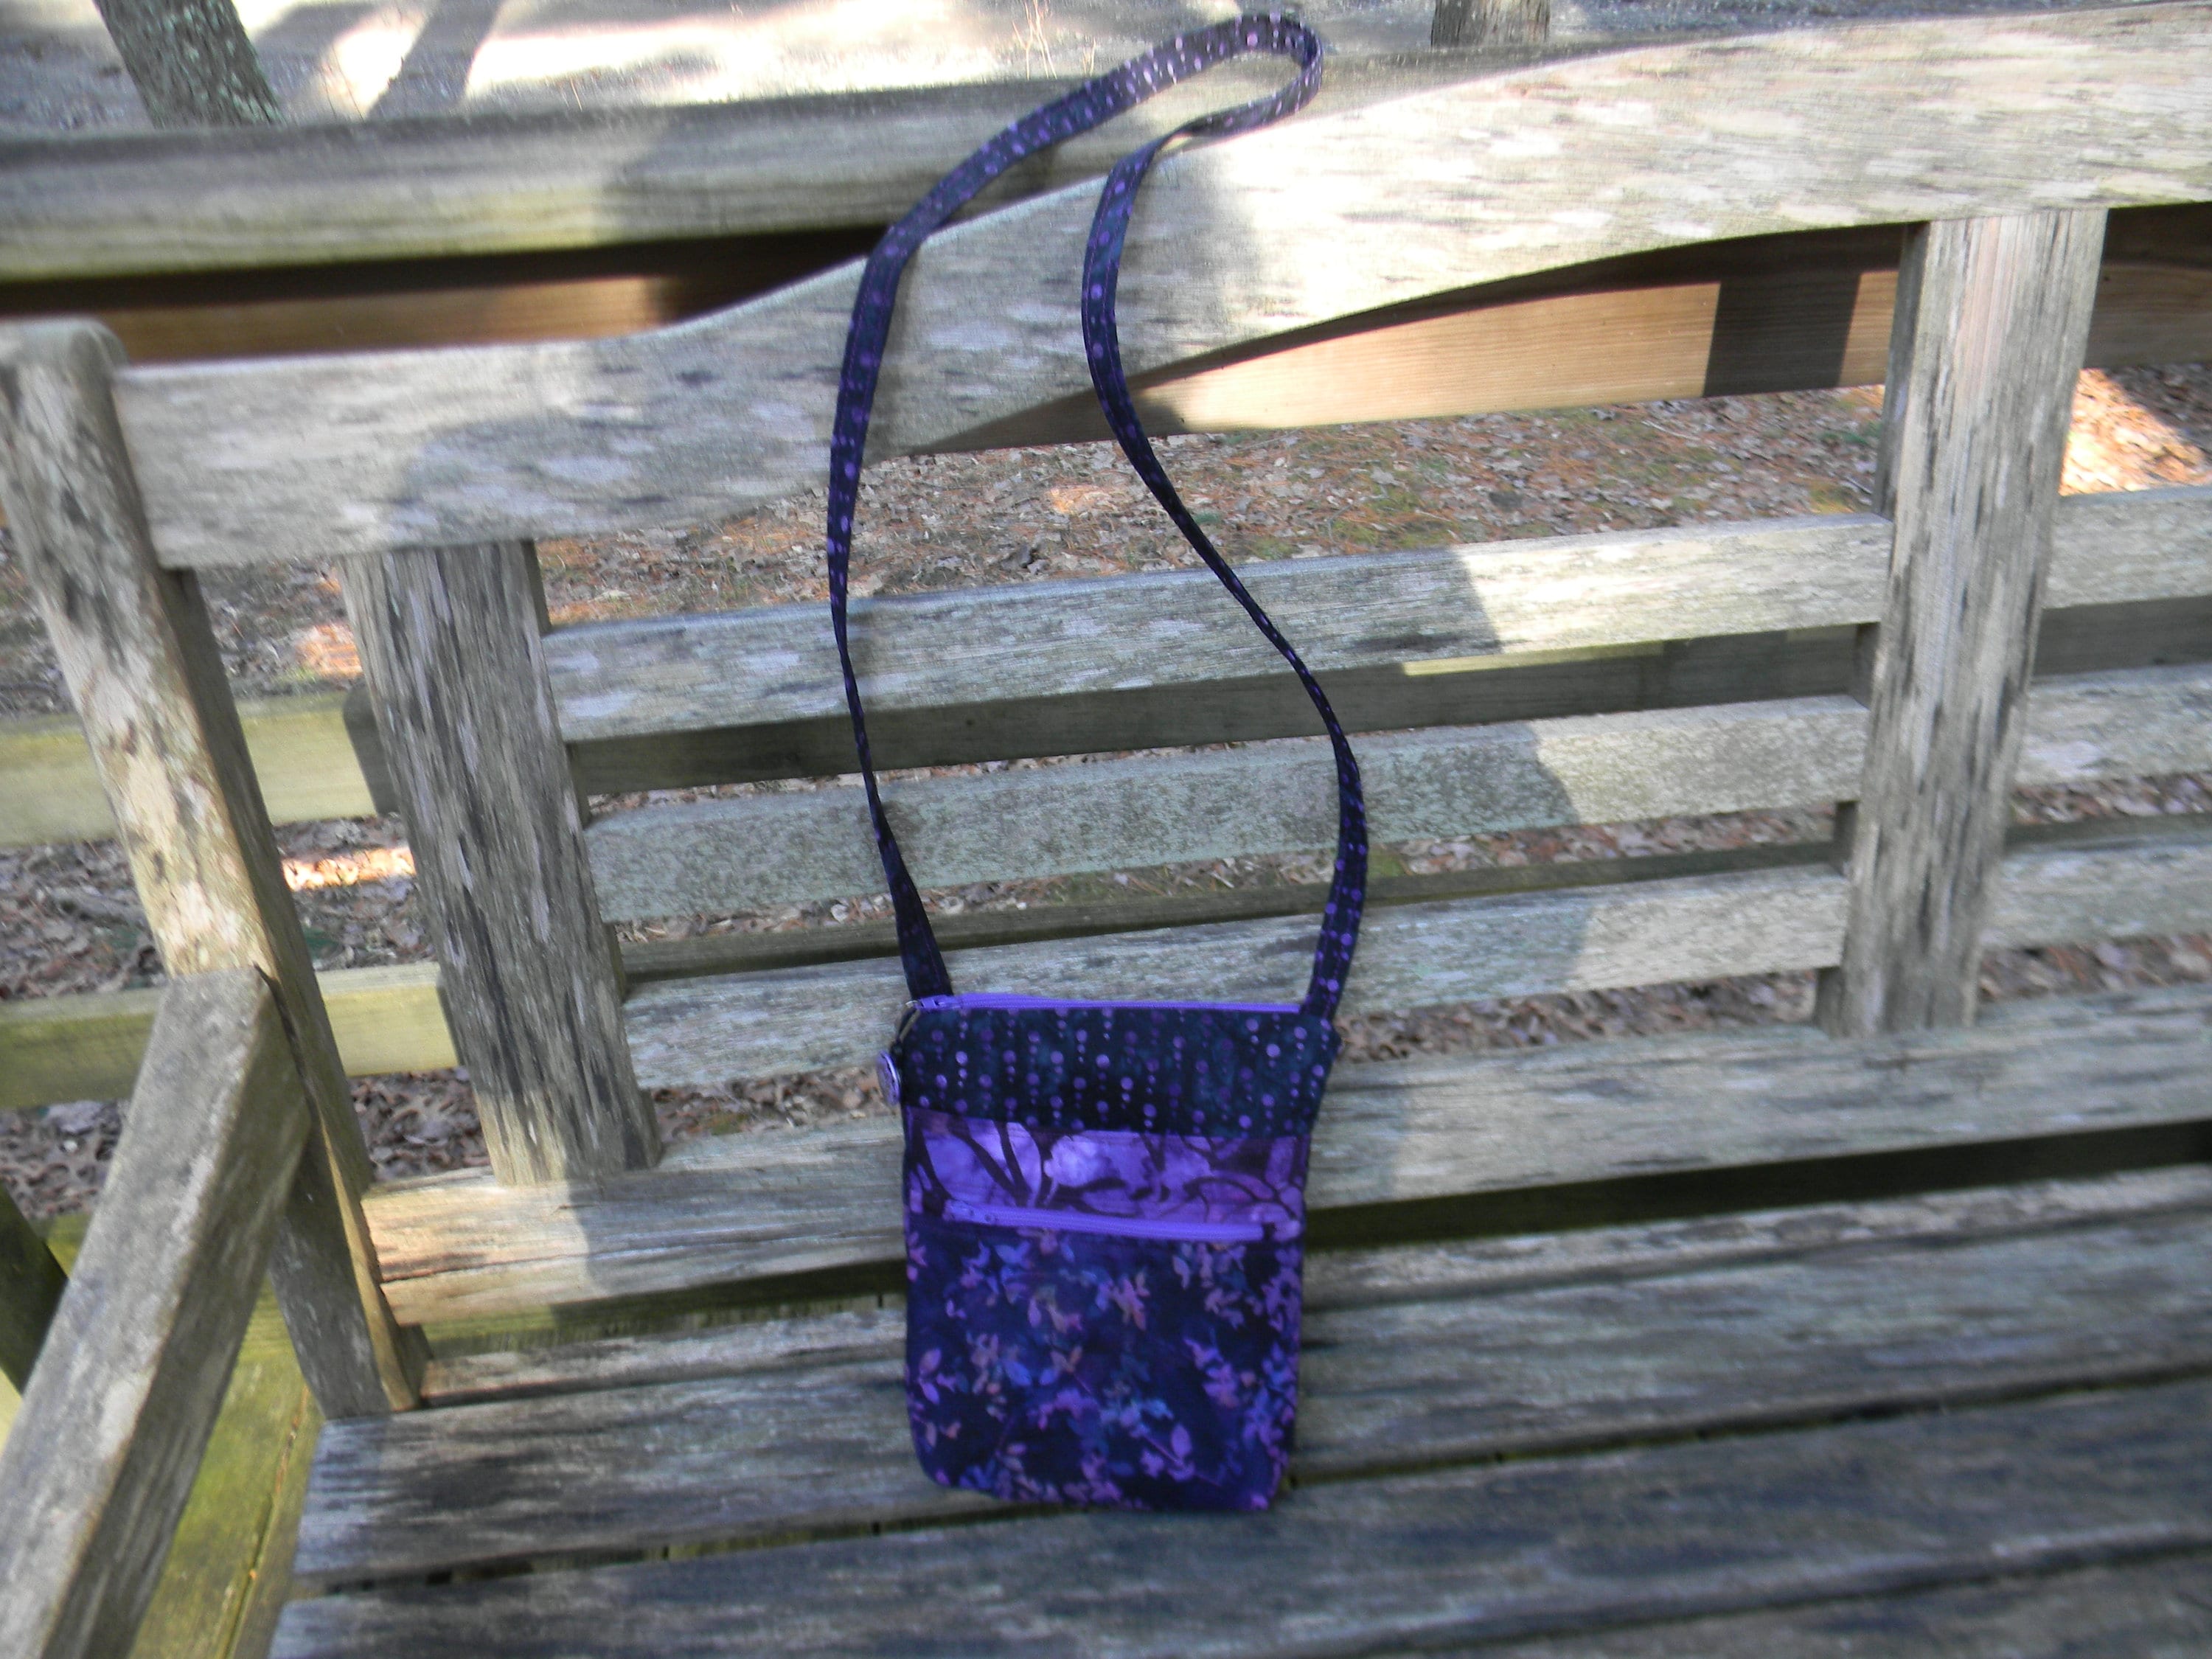 Flapdoodle Bags sells handmade handbags, accessories